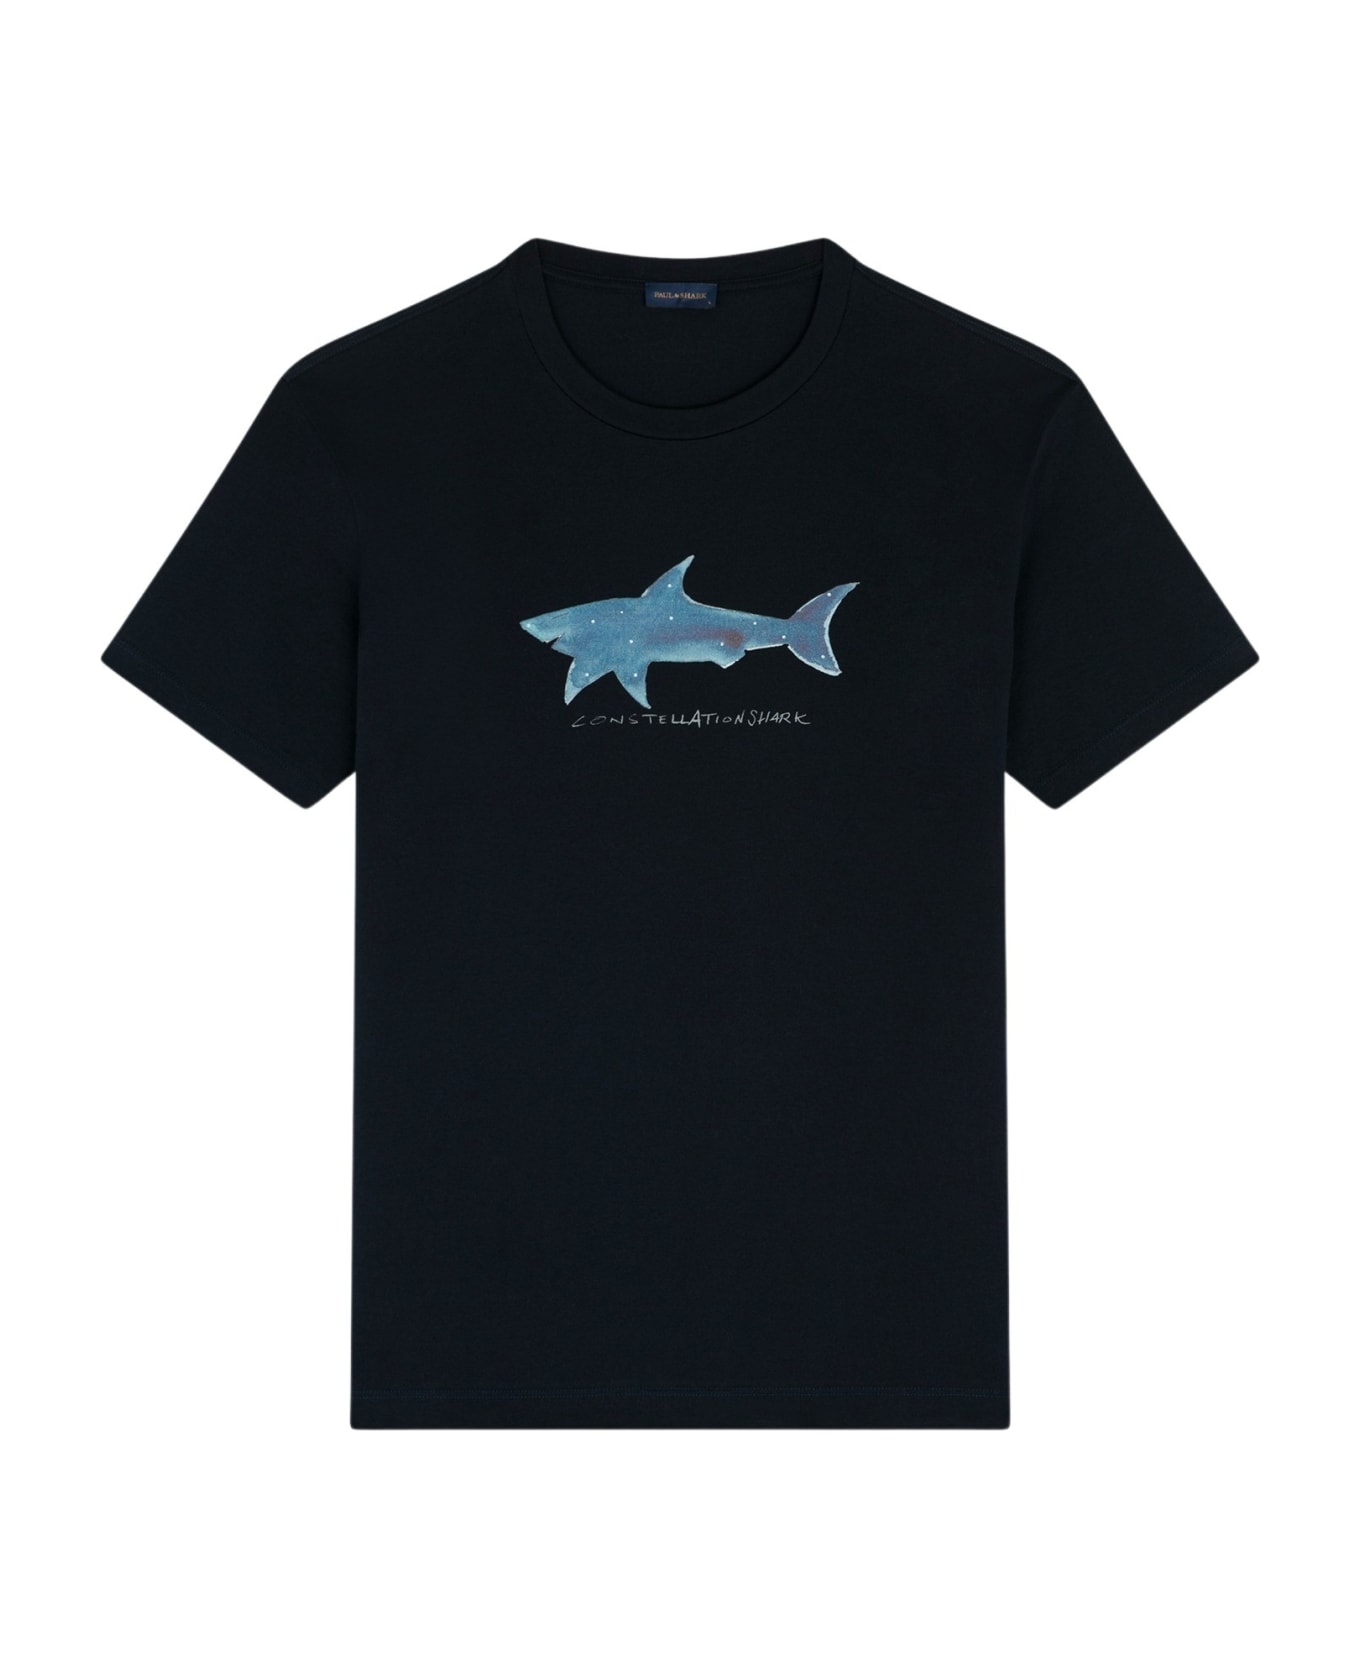 Paul&Shark Tshirt - Blue シャツ